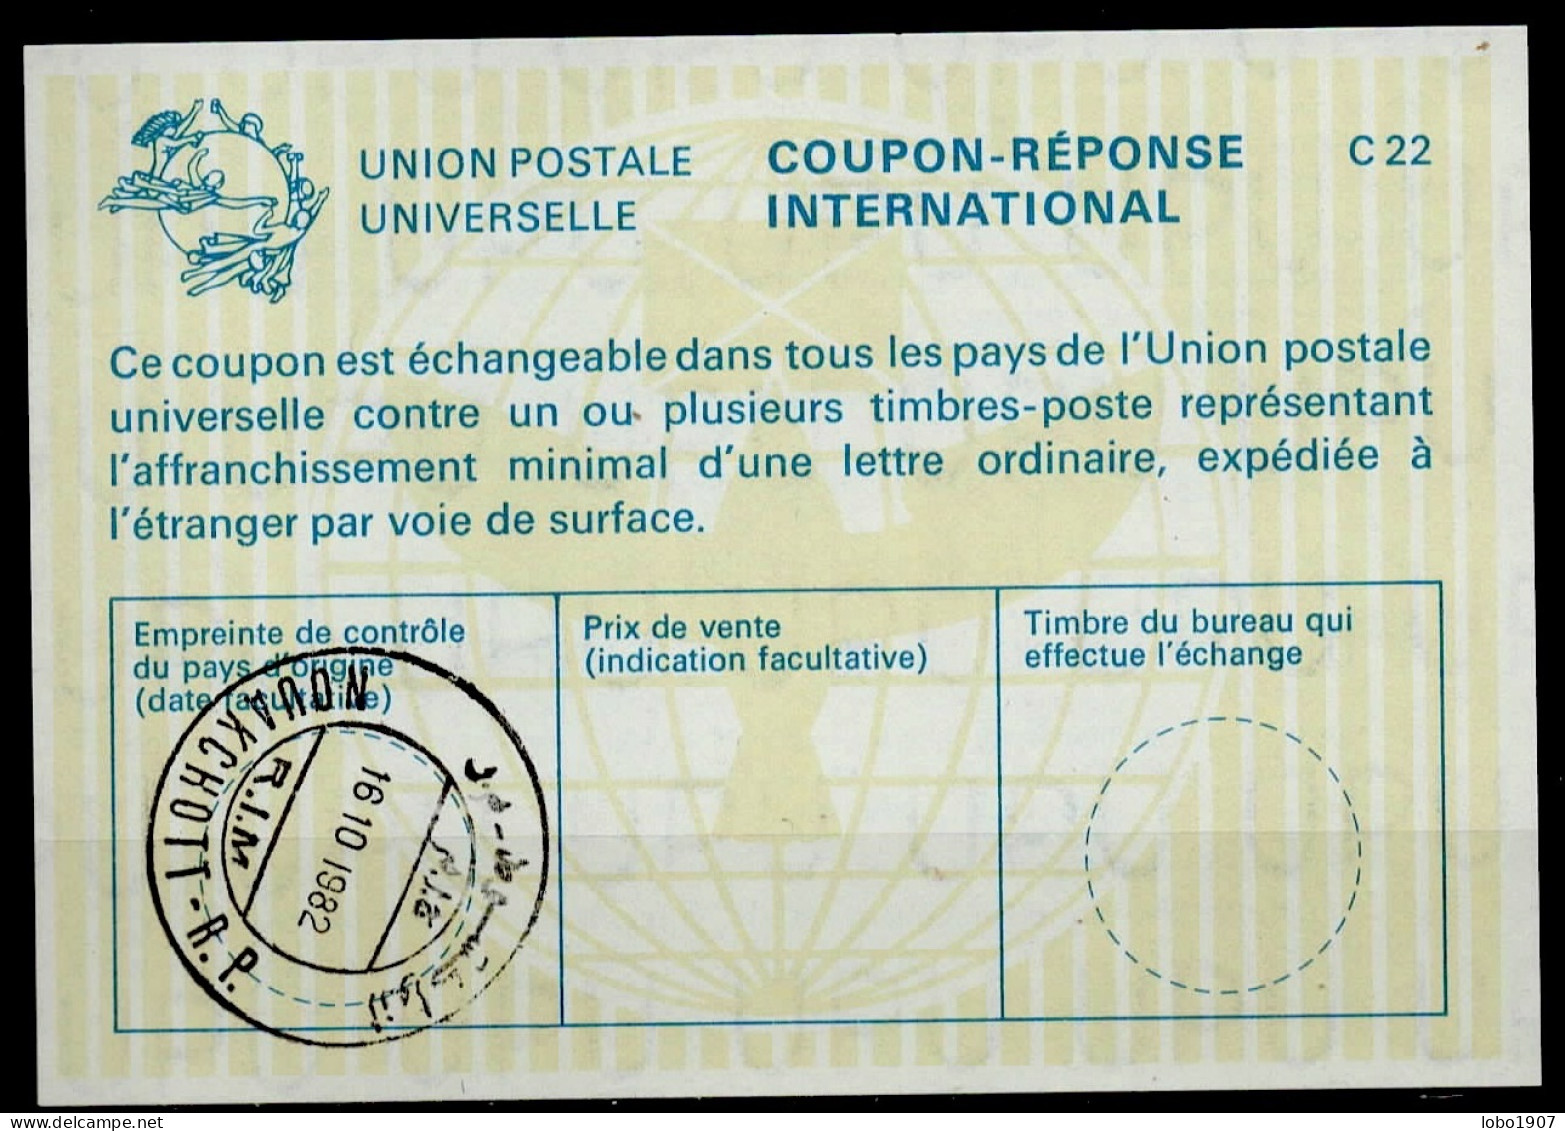 MAURITANIE / MAURITANIA  La22  International Reply Coupon Reponse Cupon Respuesta IRC IAS  Cupon Respuesta O NOUAKCHOTT - Mauritanie (1960-...)